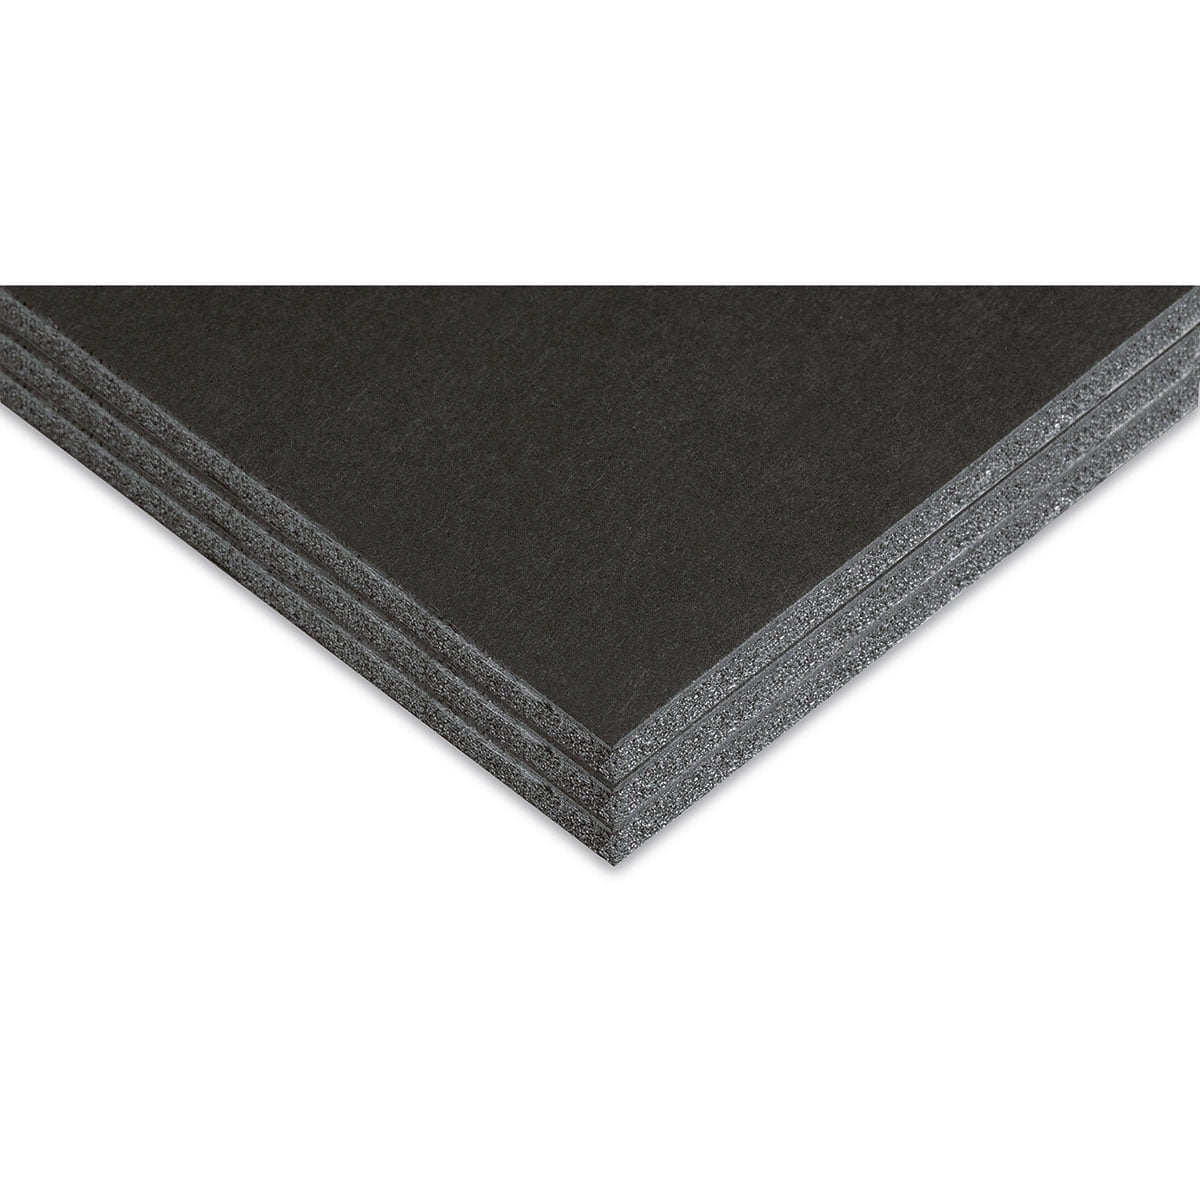 Mat Board Center, Pack of 10 3/16 Black Foam Core Backing Boards (16x20, Black)